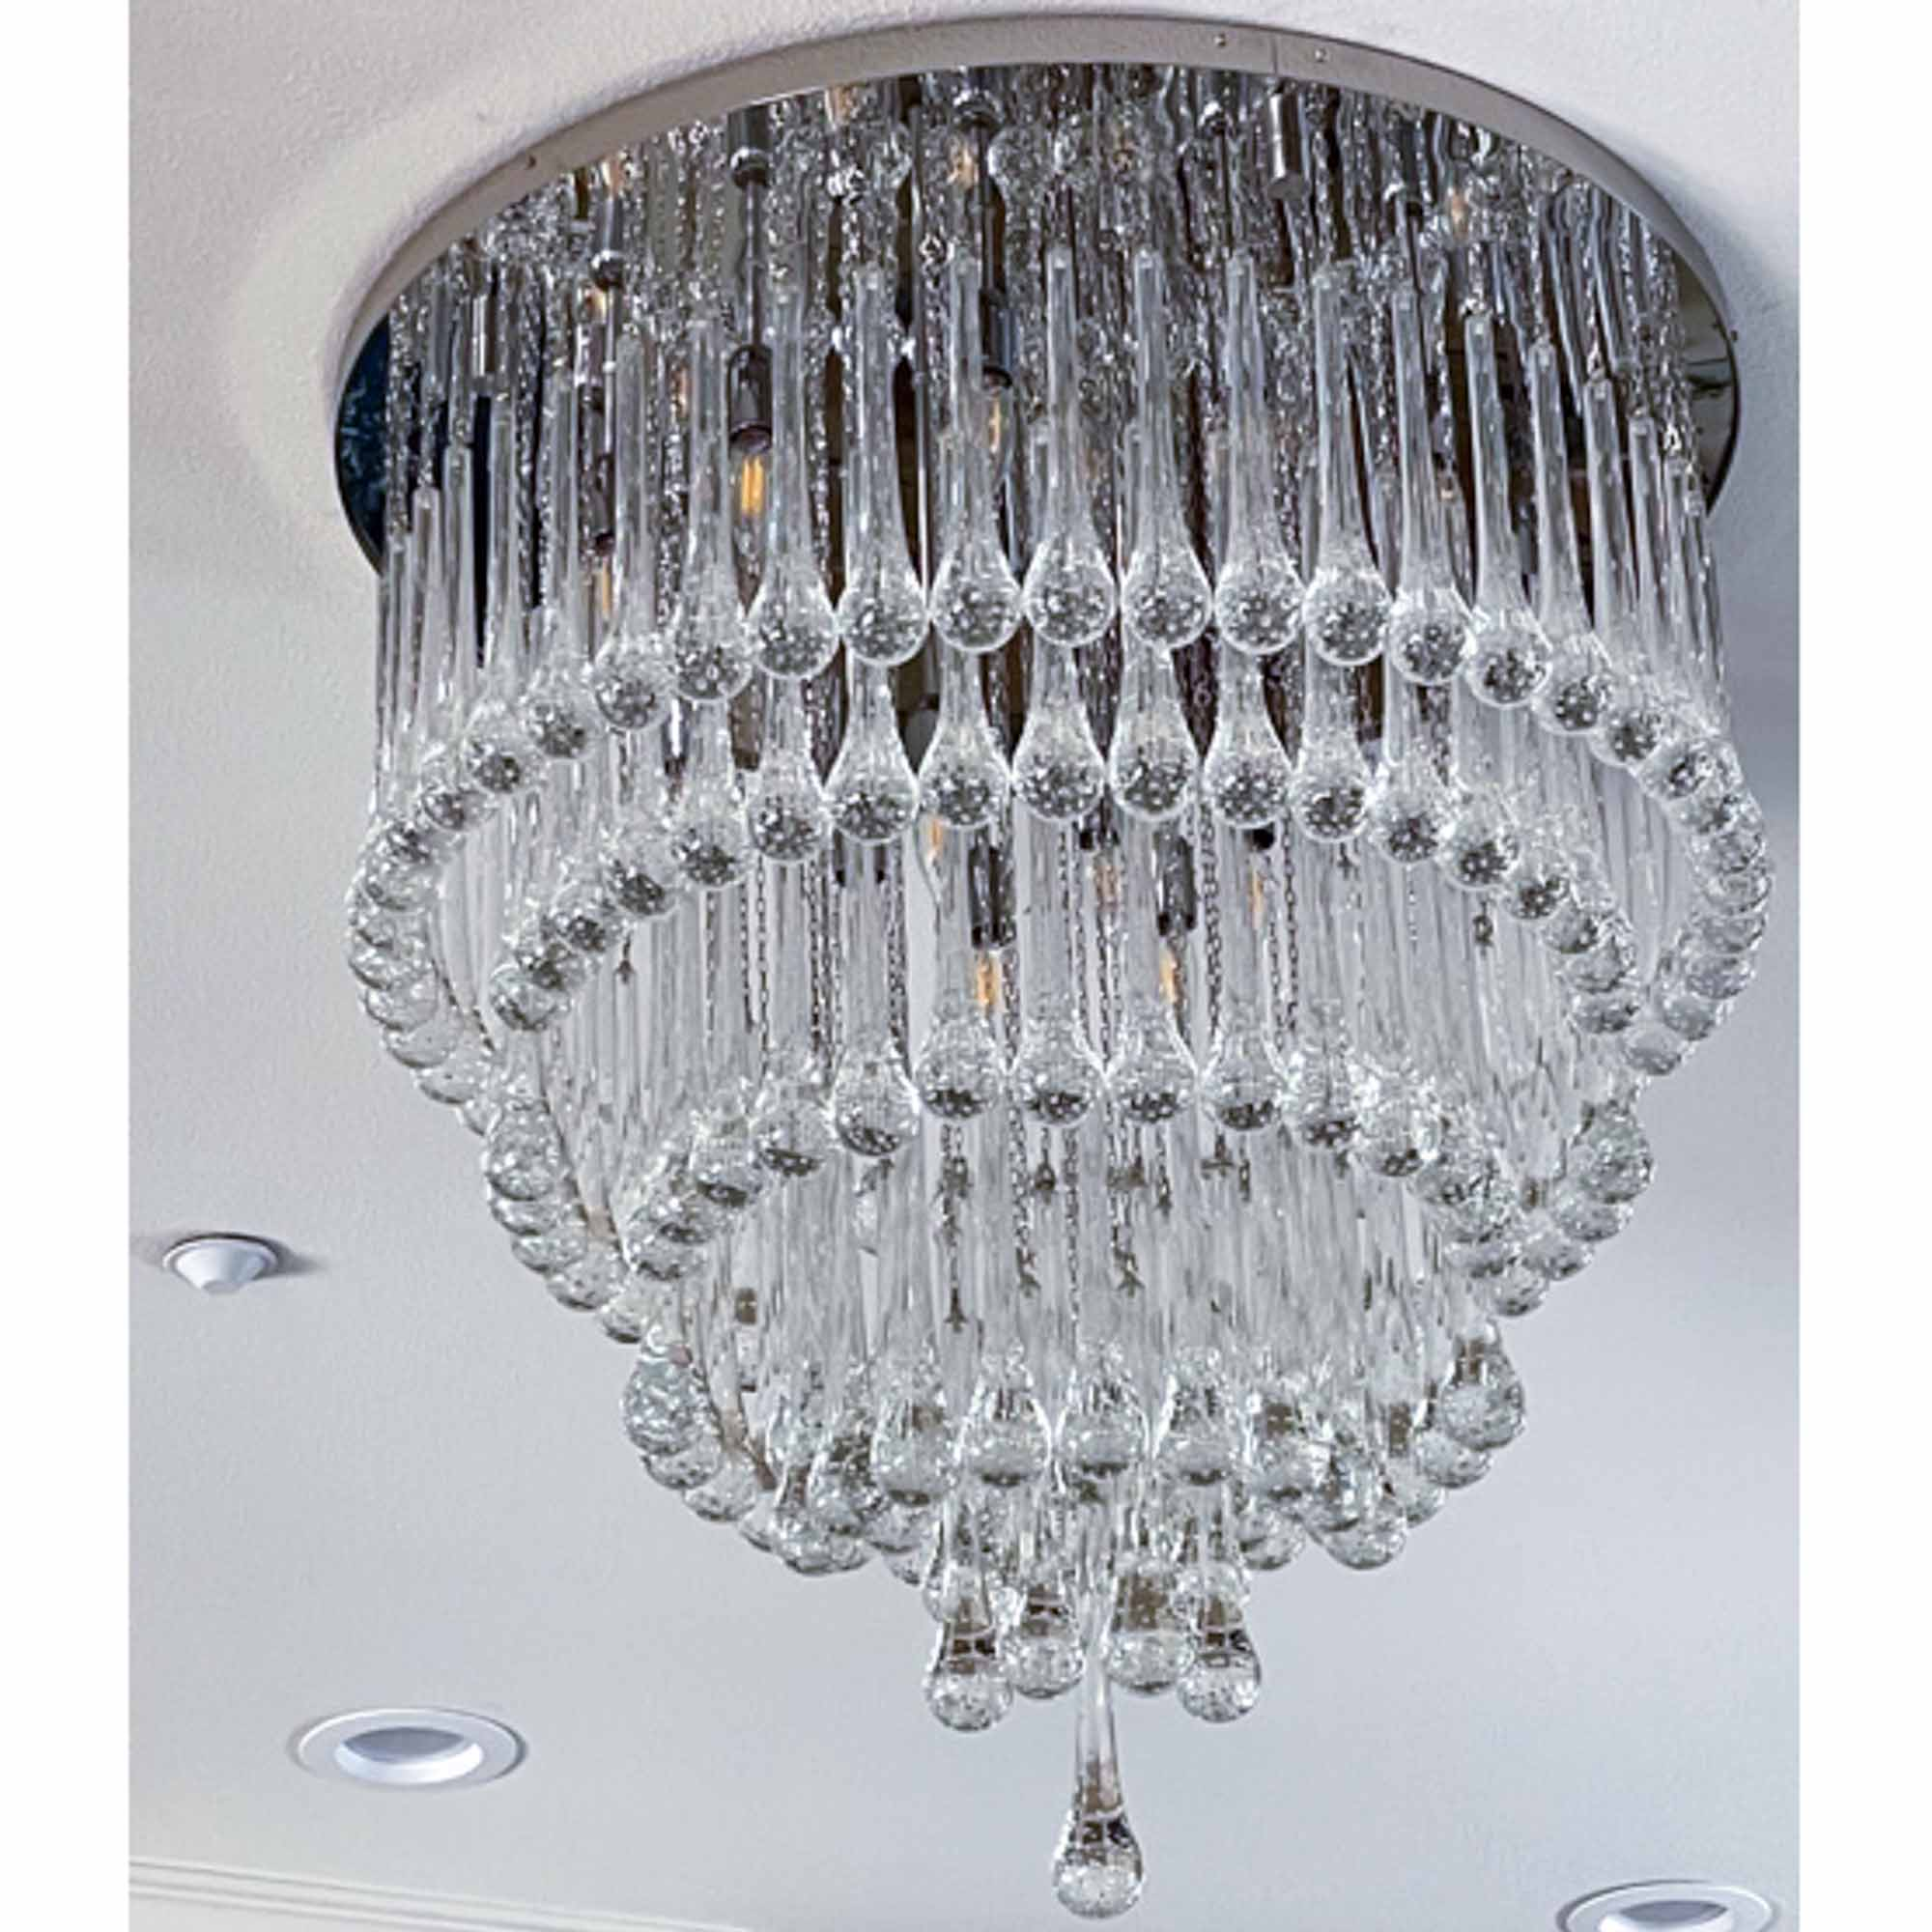 A Murano Glass chandelier